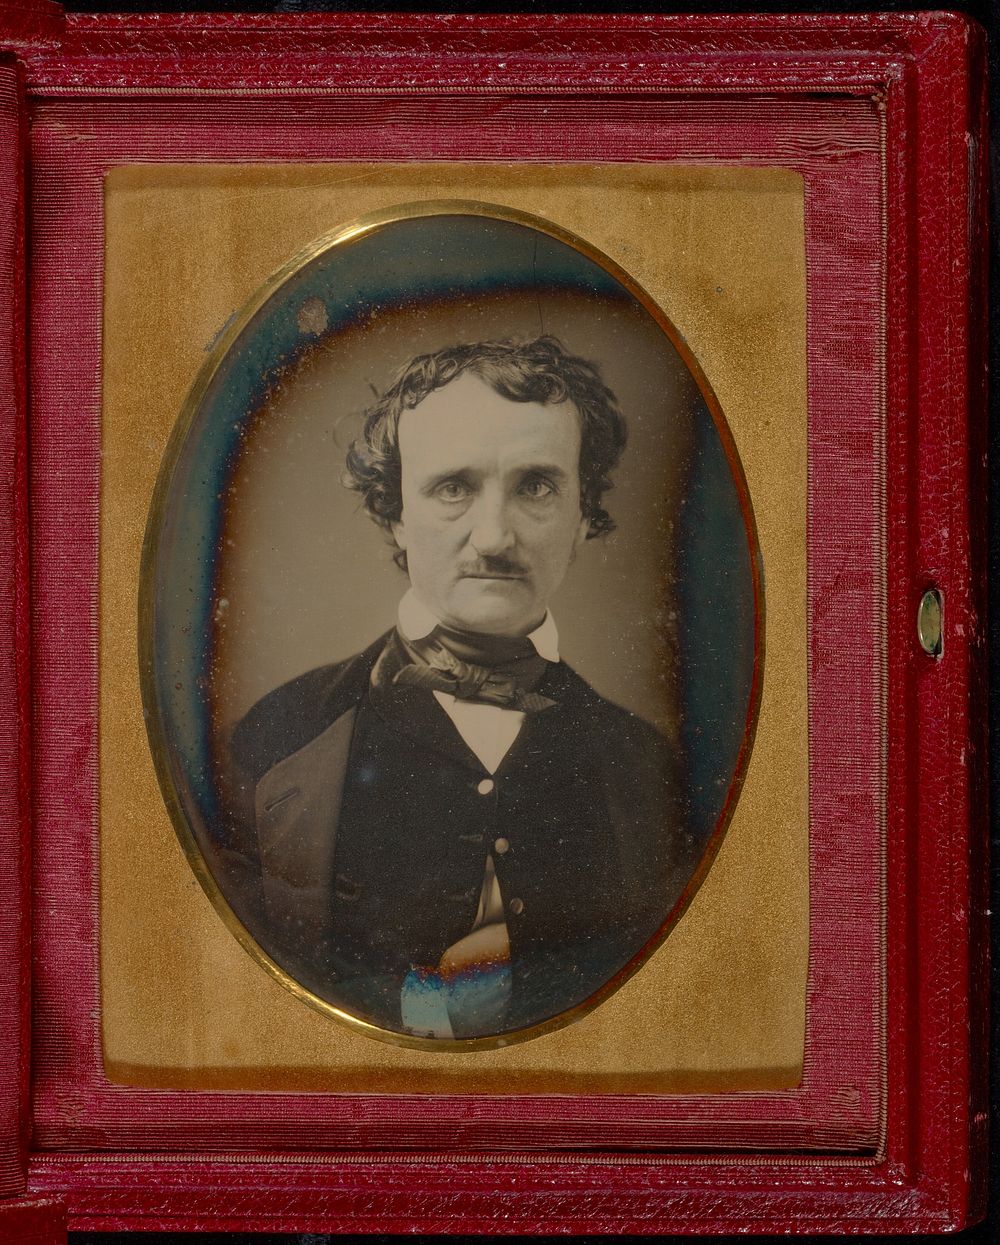 Portrait of Edgar Allan Poe